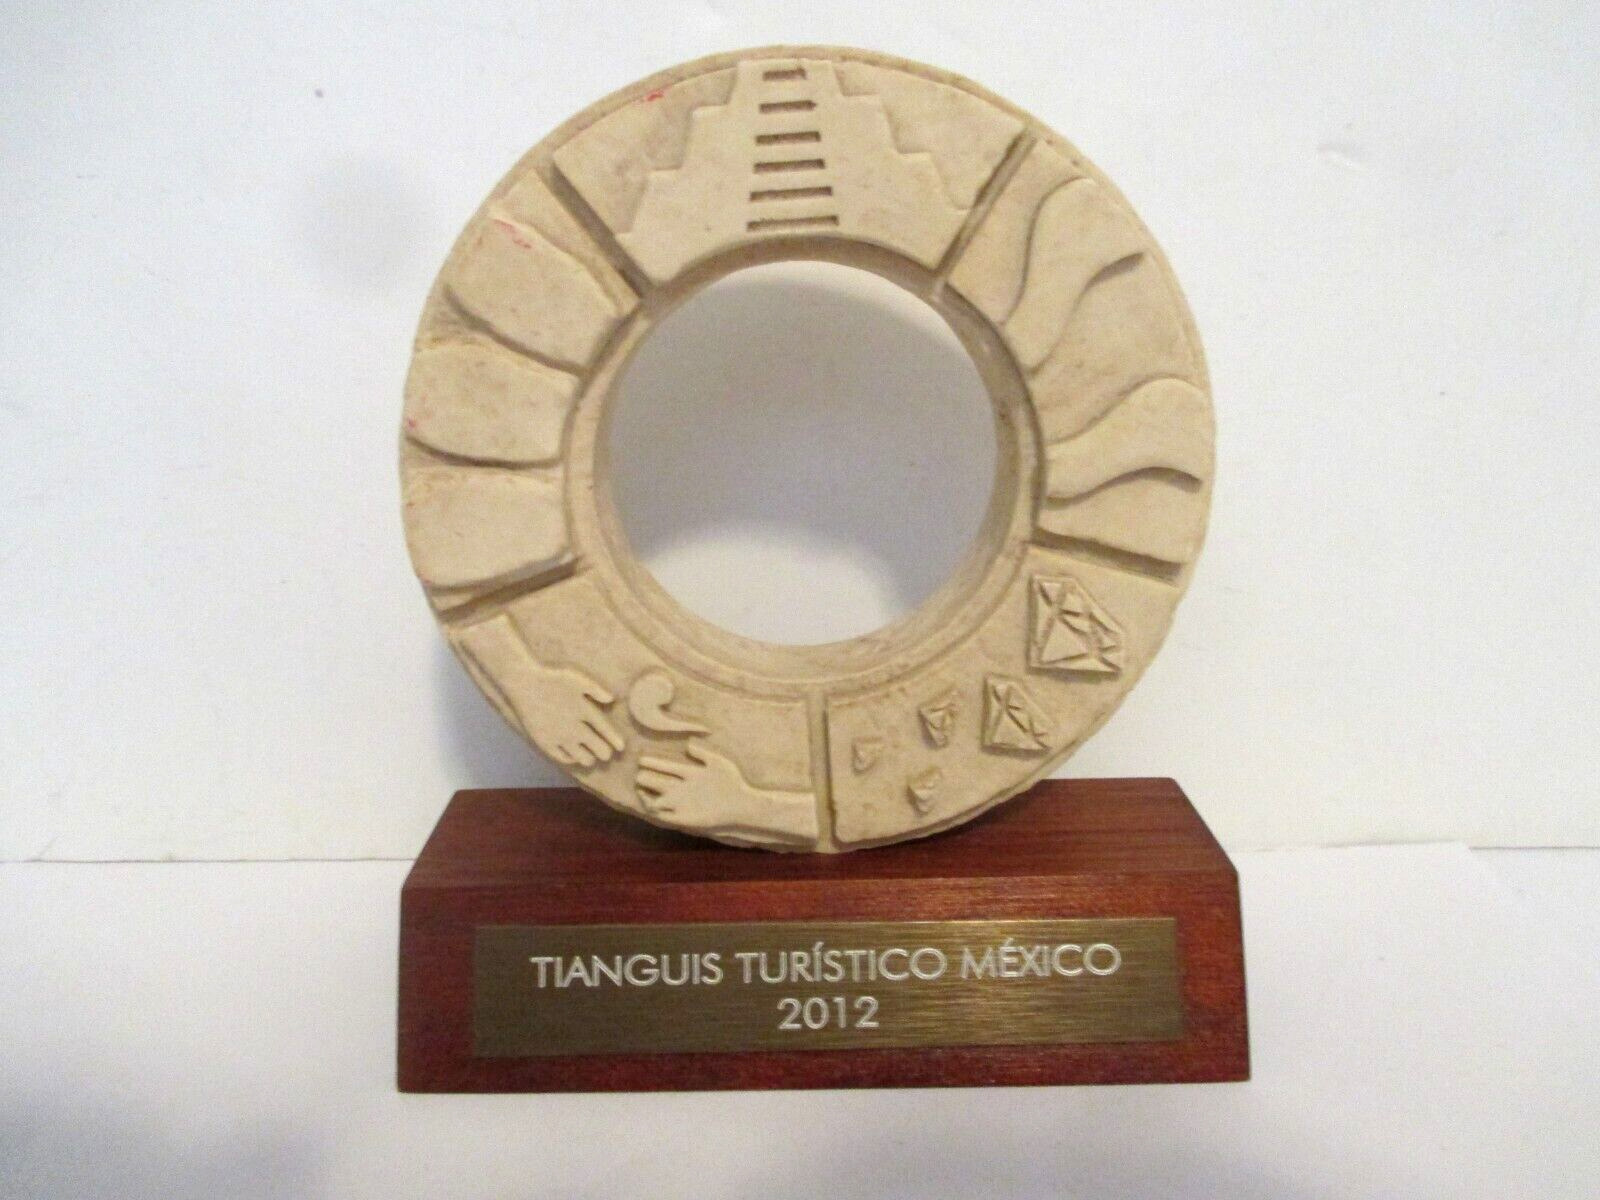 2012 TIANGUIS TOURIST MEXICO AWARD TROPHY ART PIECE MAYAN AZTEC? OPEN AIR MARKET